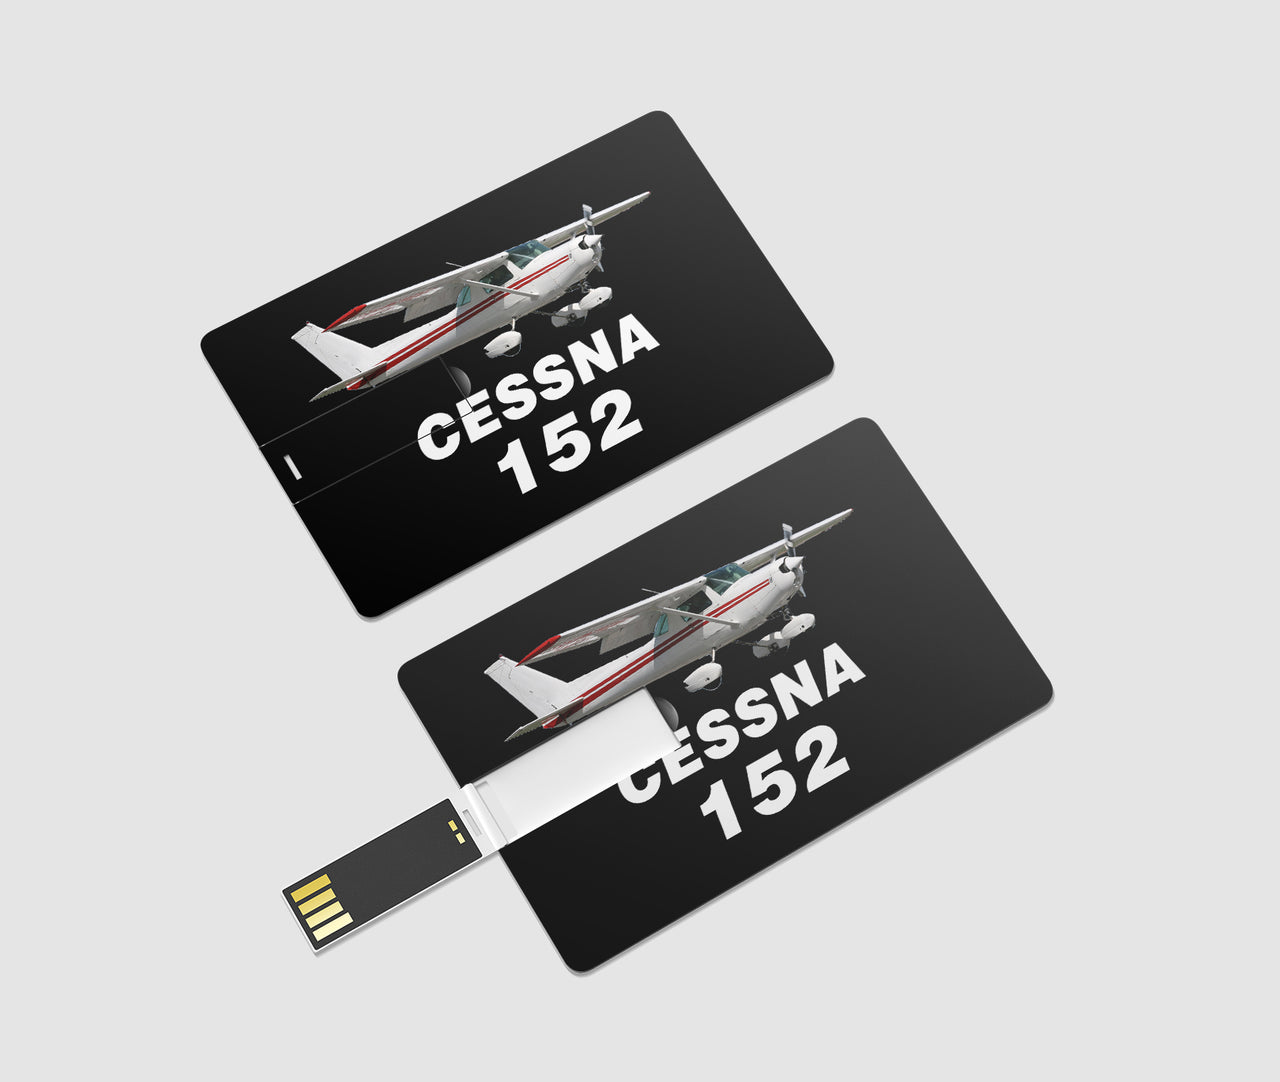 The Cessna 152 Designed USB Cards